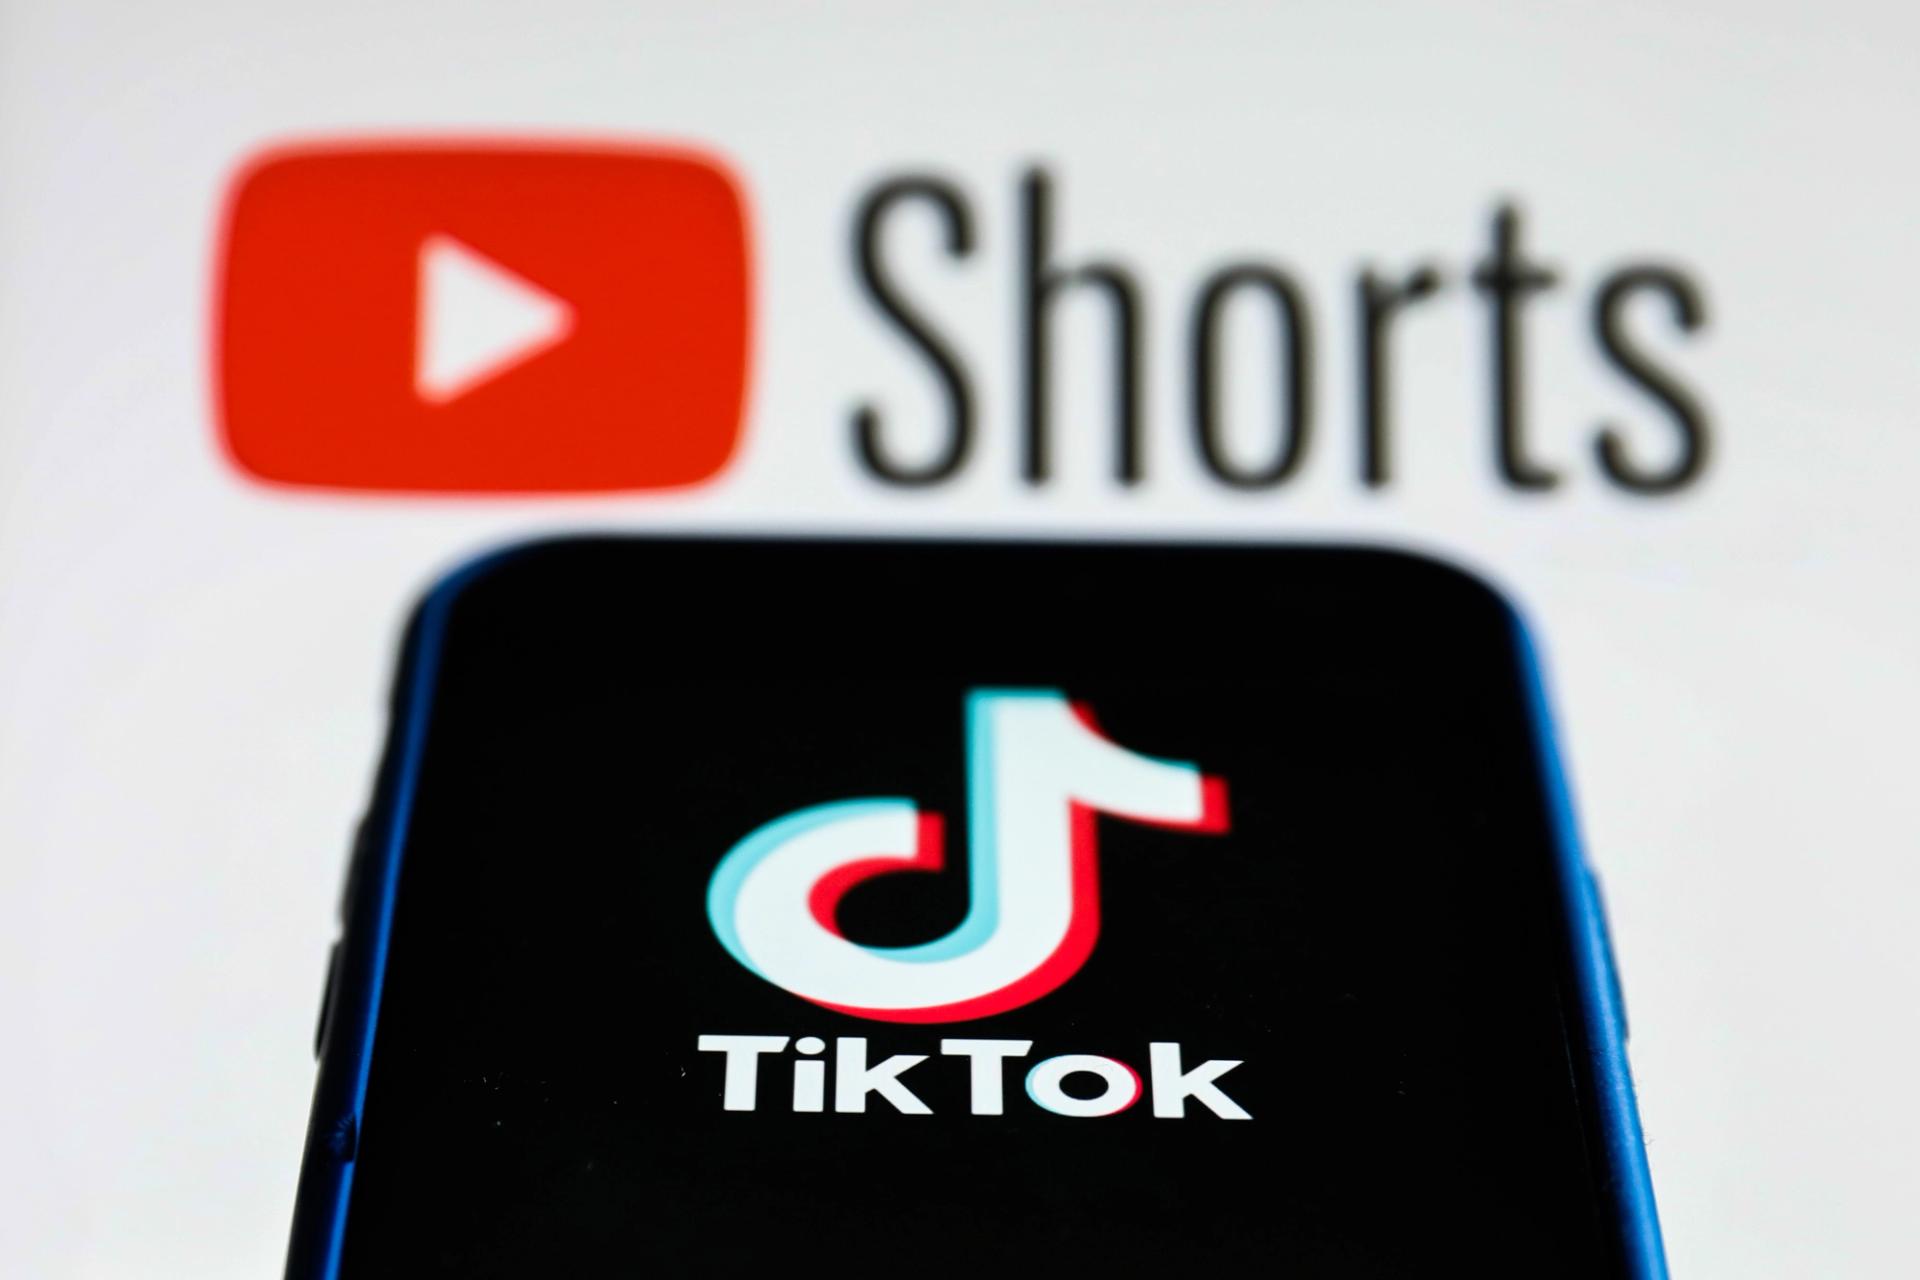 The Shorts and TikTok logos